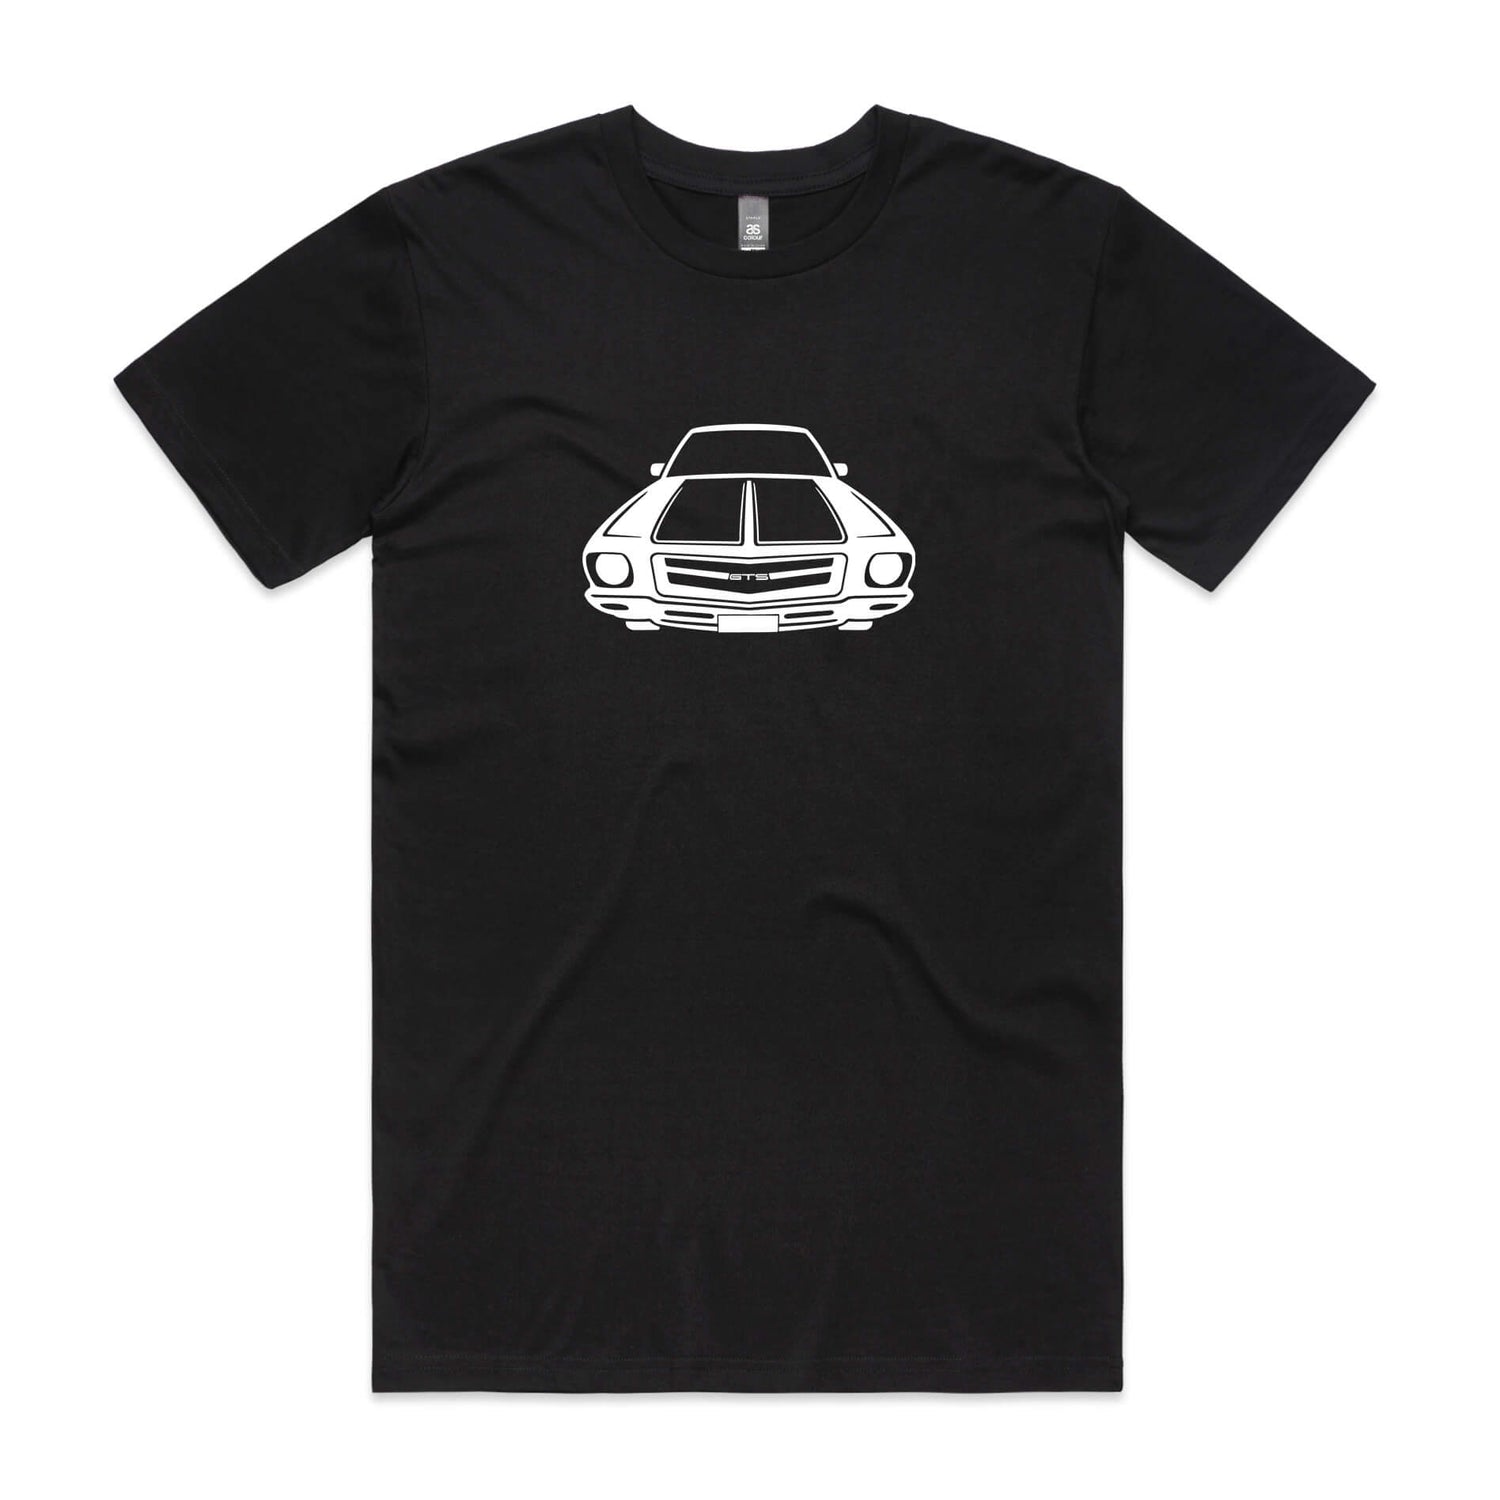 Holden HQ Monaro t-shirt in black